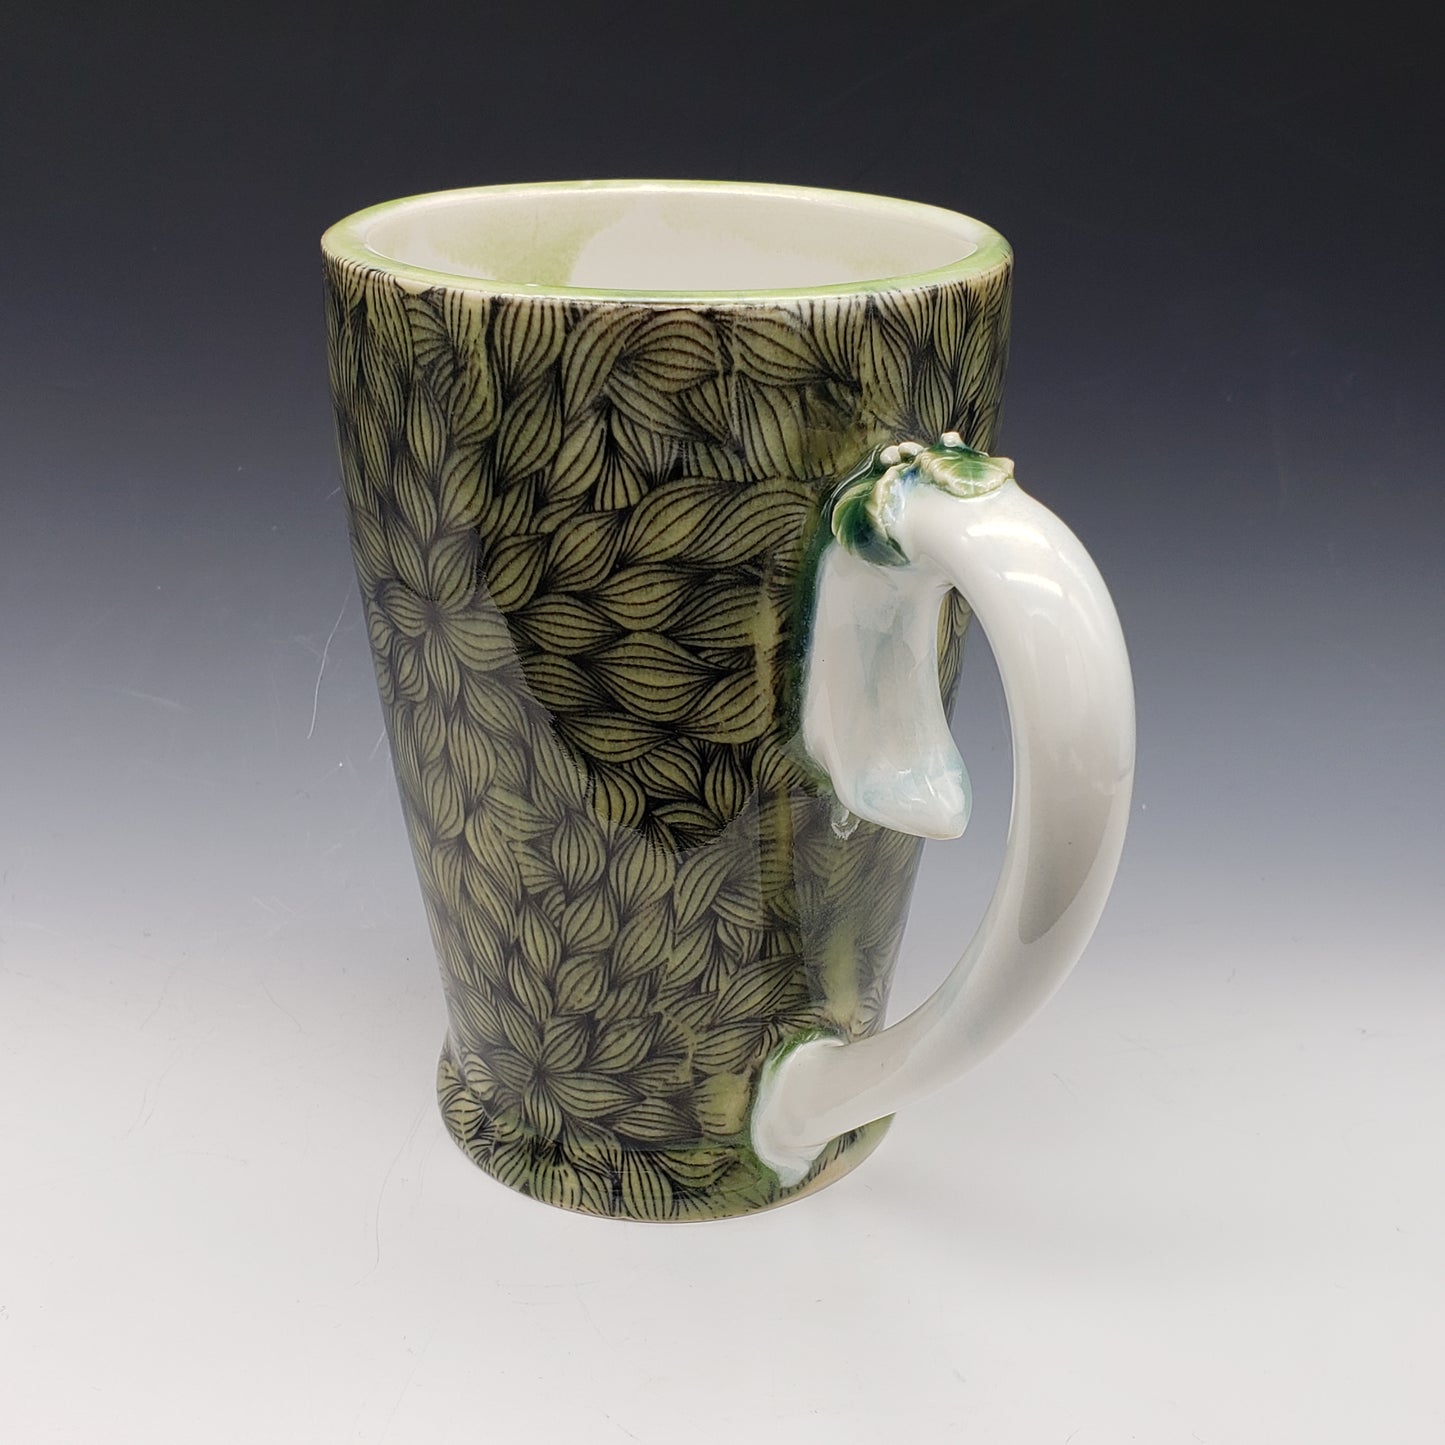 Green leaf mug